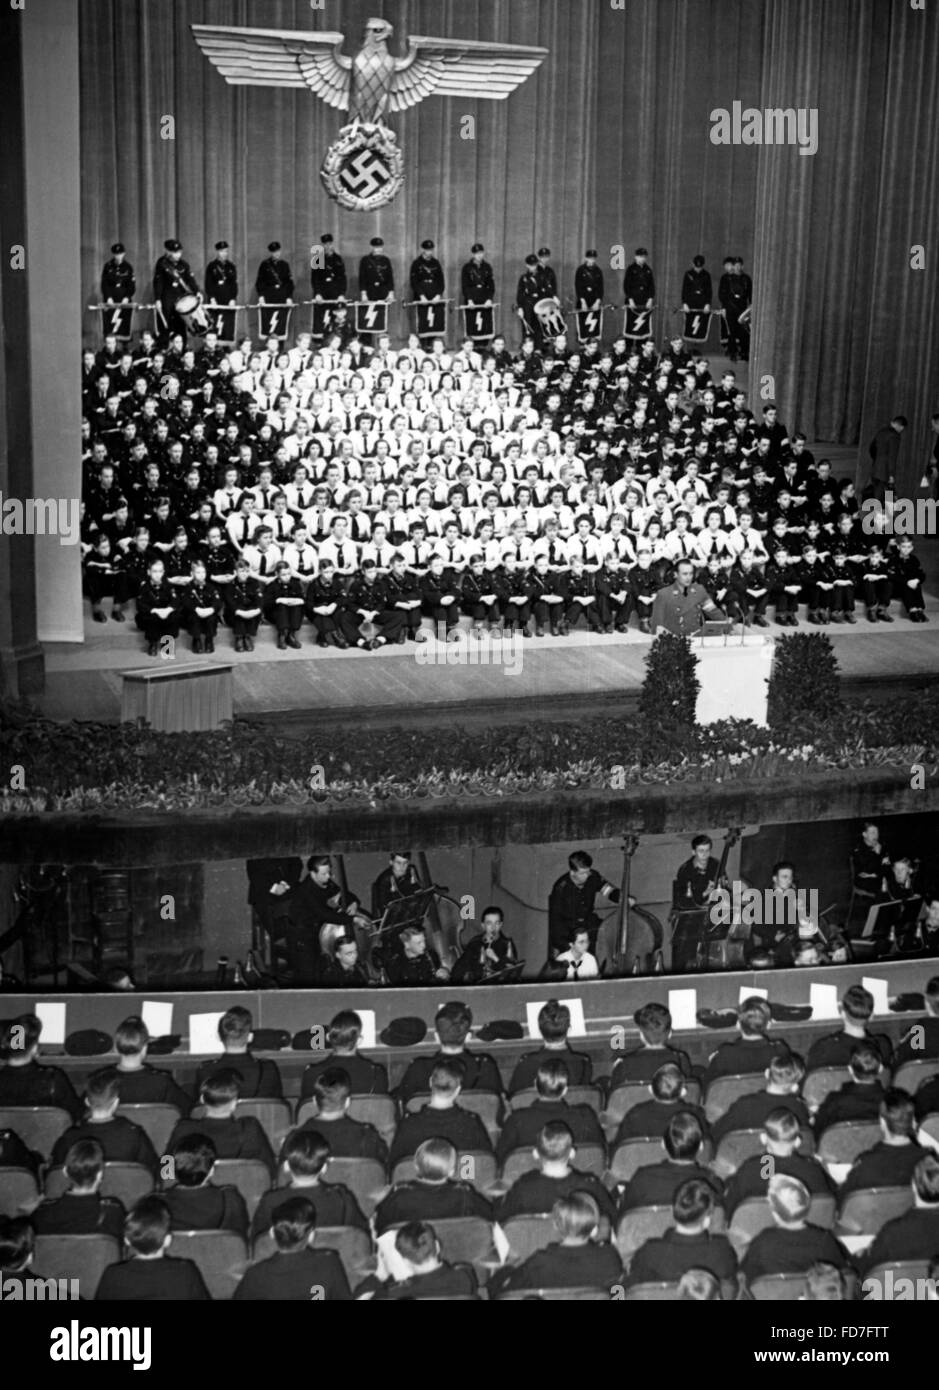 Verpflichtung der Jugend (Commitment of the Youth) ceremony at the Deutsche Opernhaus, 1942 Stock Photo